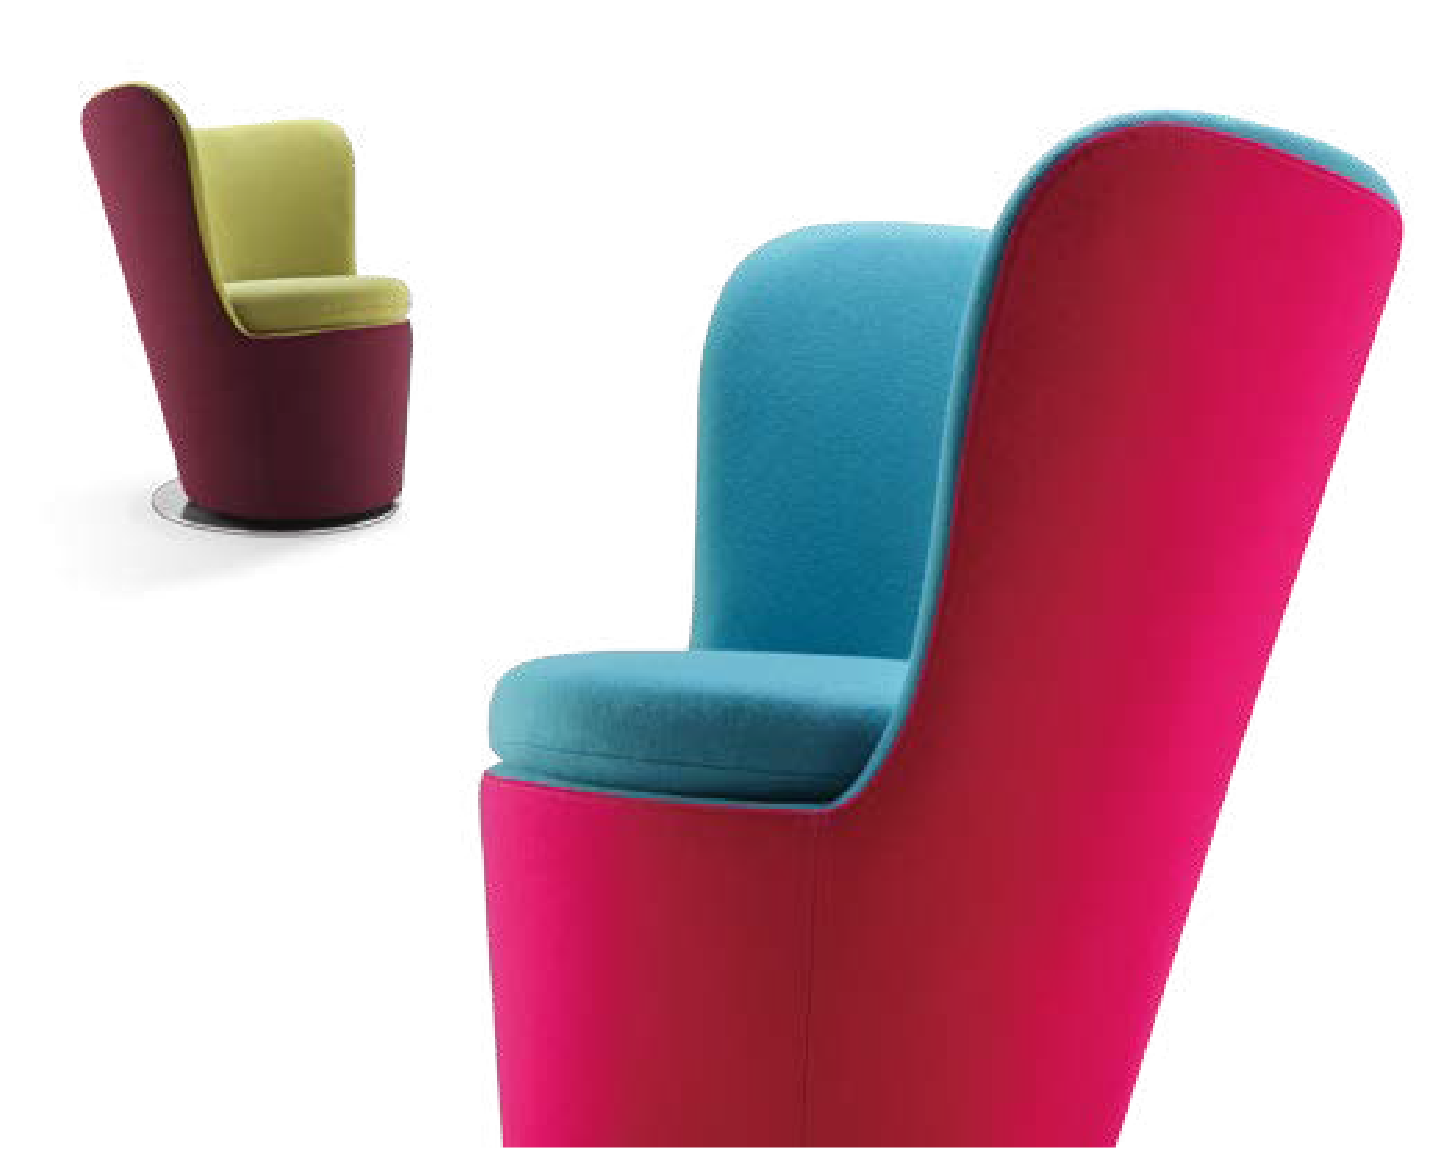 Rotondo Leisure chair (1)